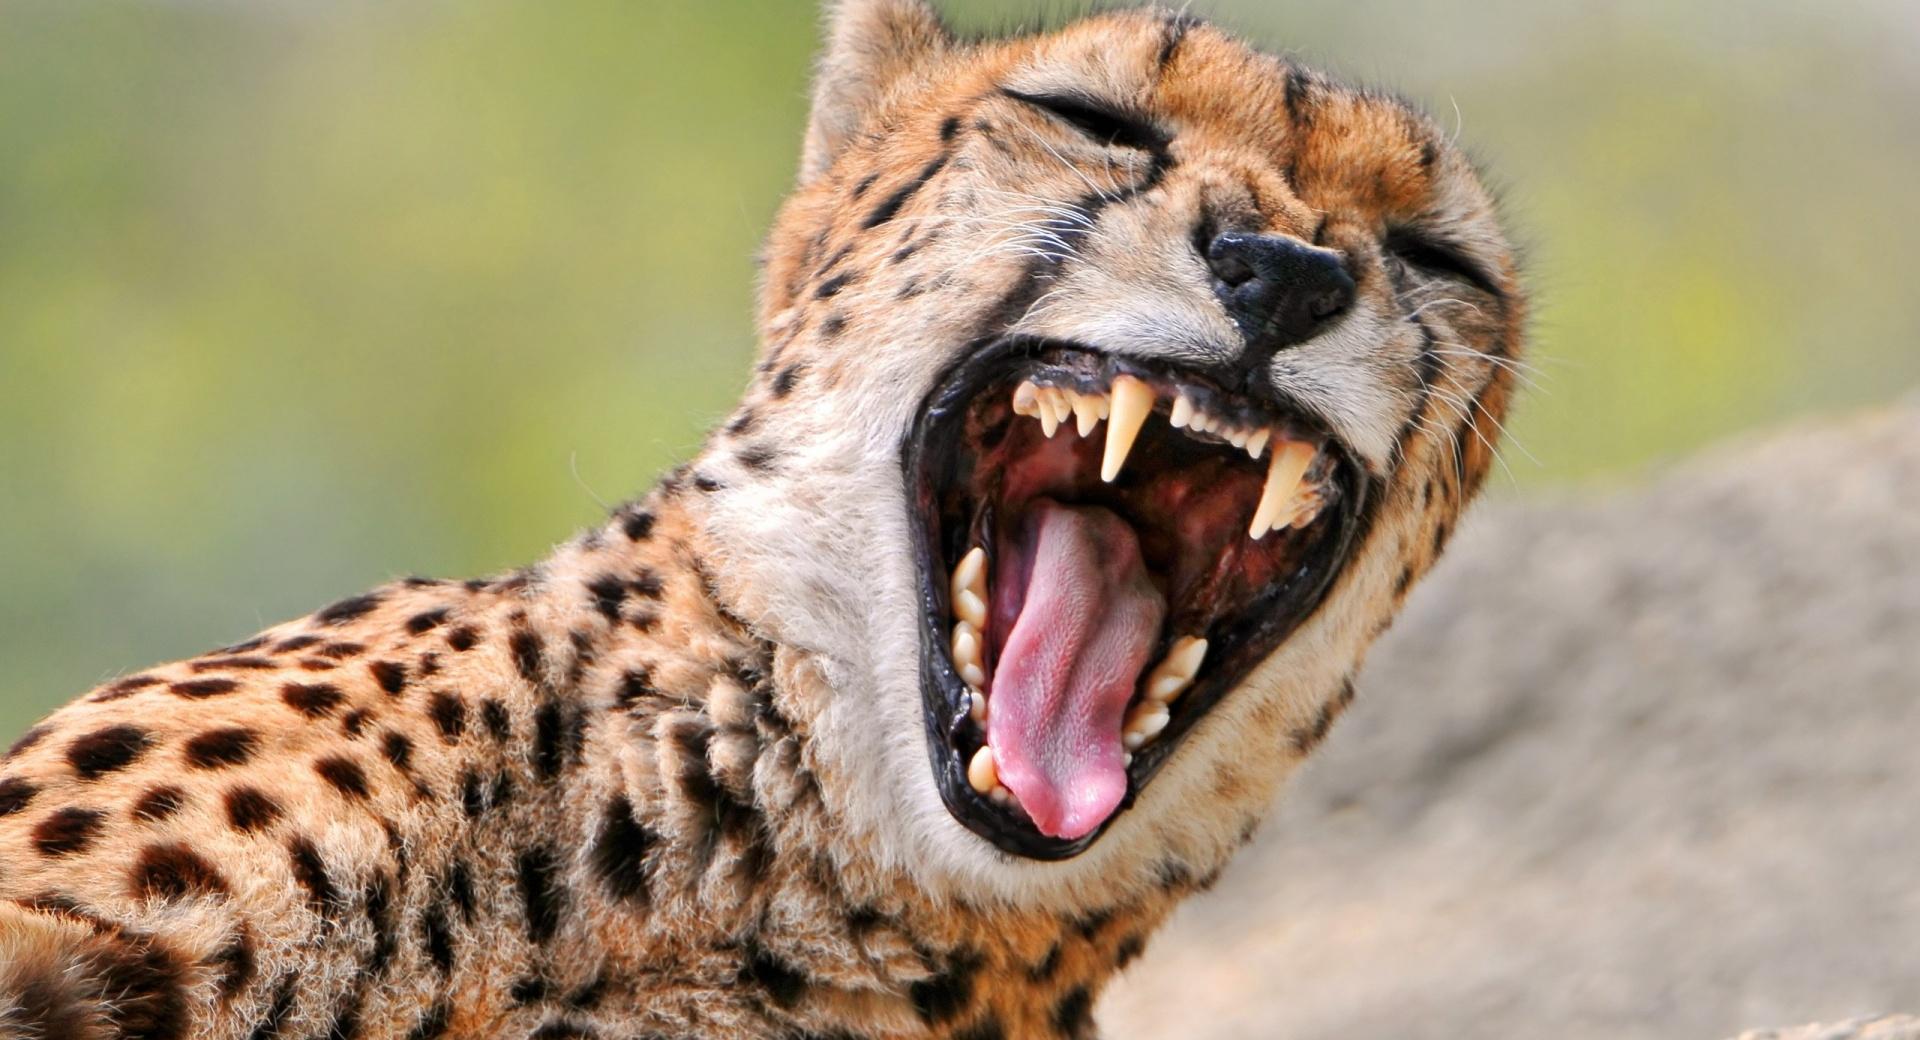 Cheetah Yawning at 2048 x 2048 iPad size wallpapers HD quality